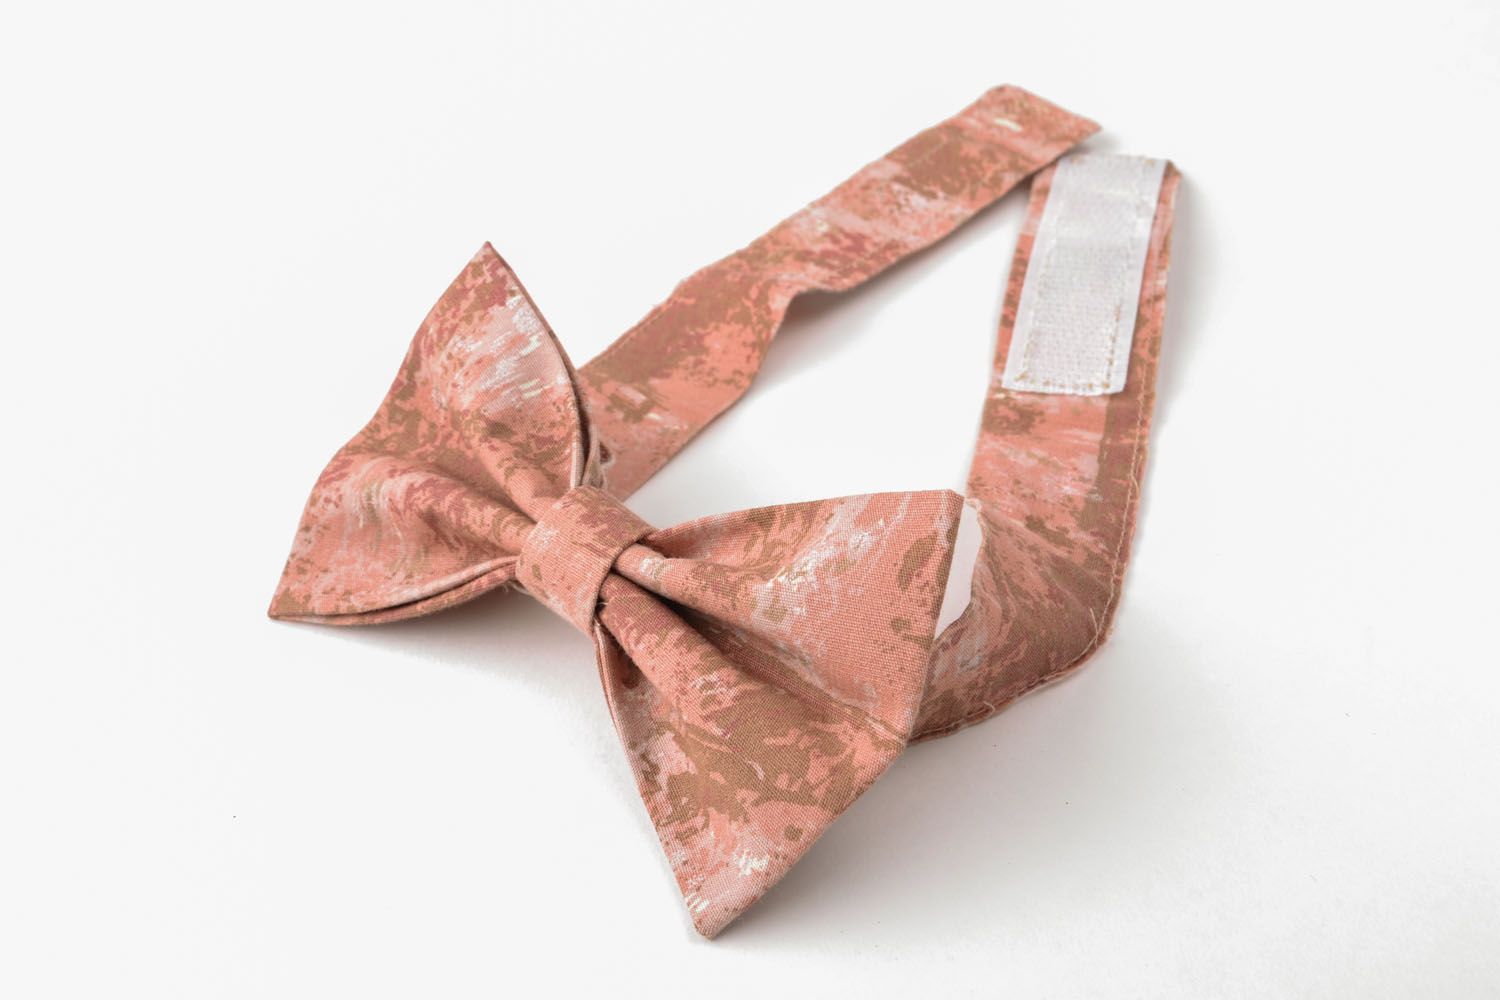 unusual bow ties